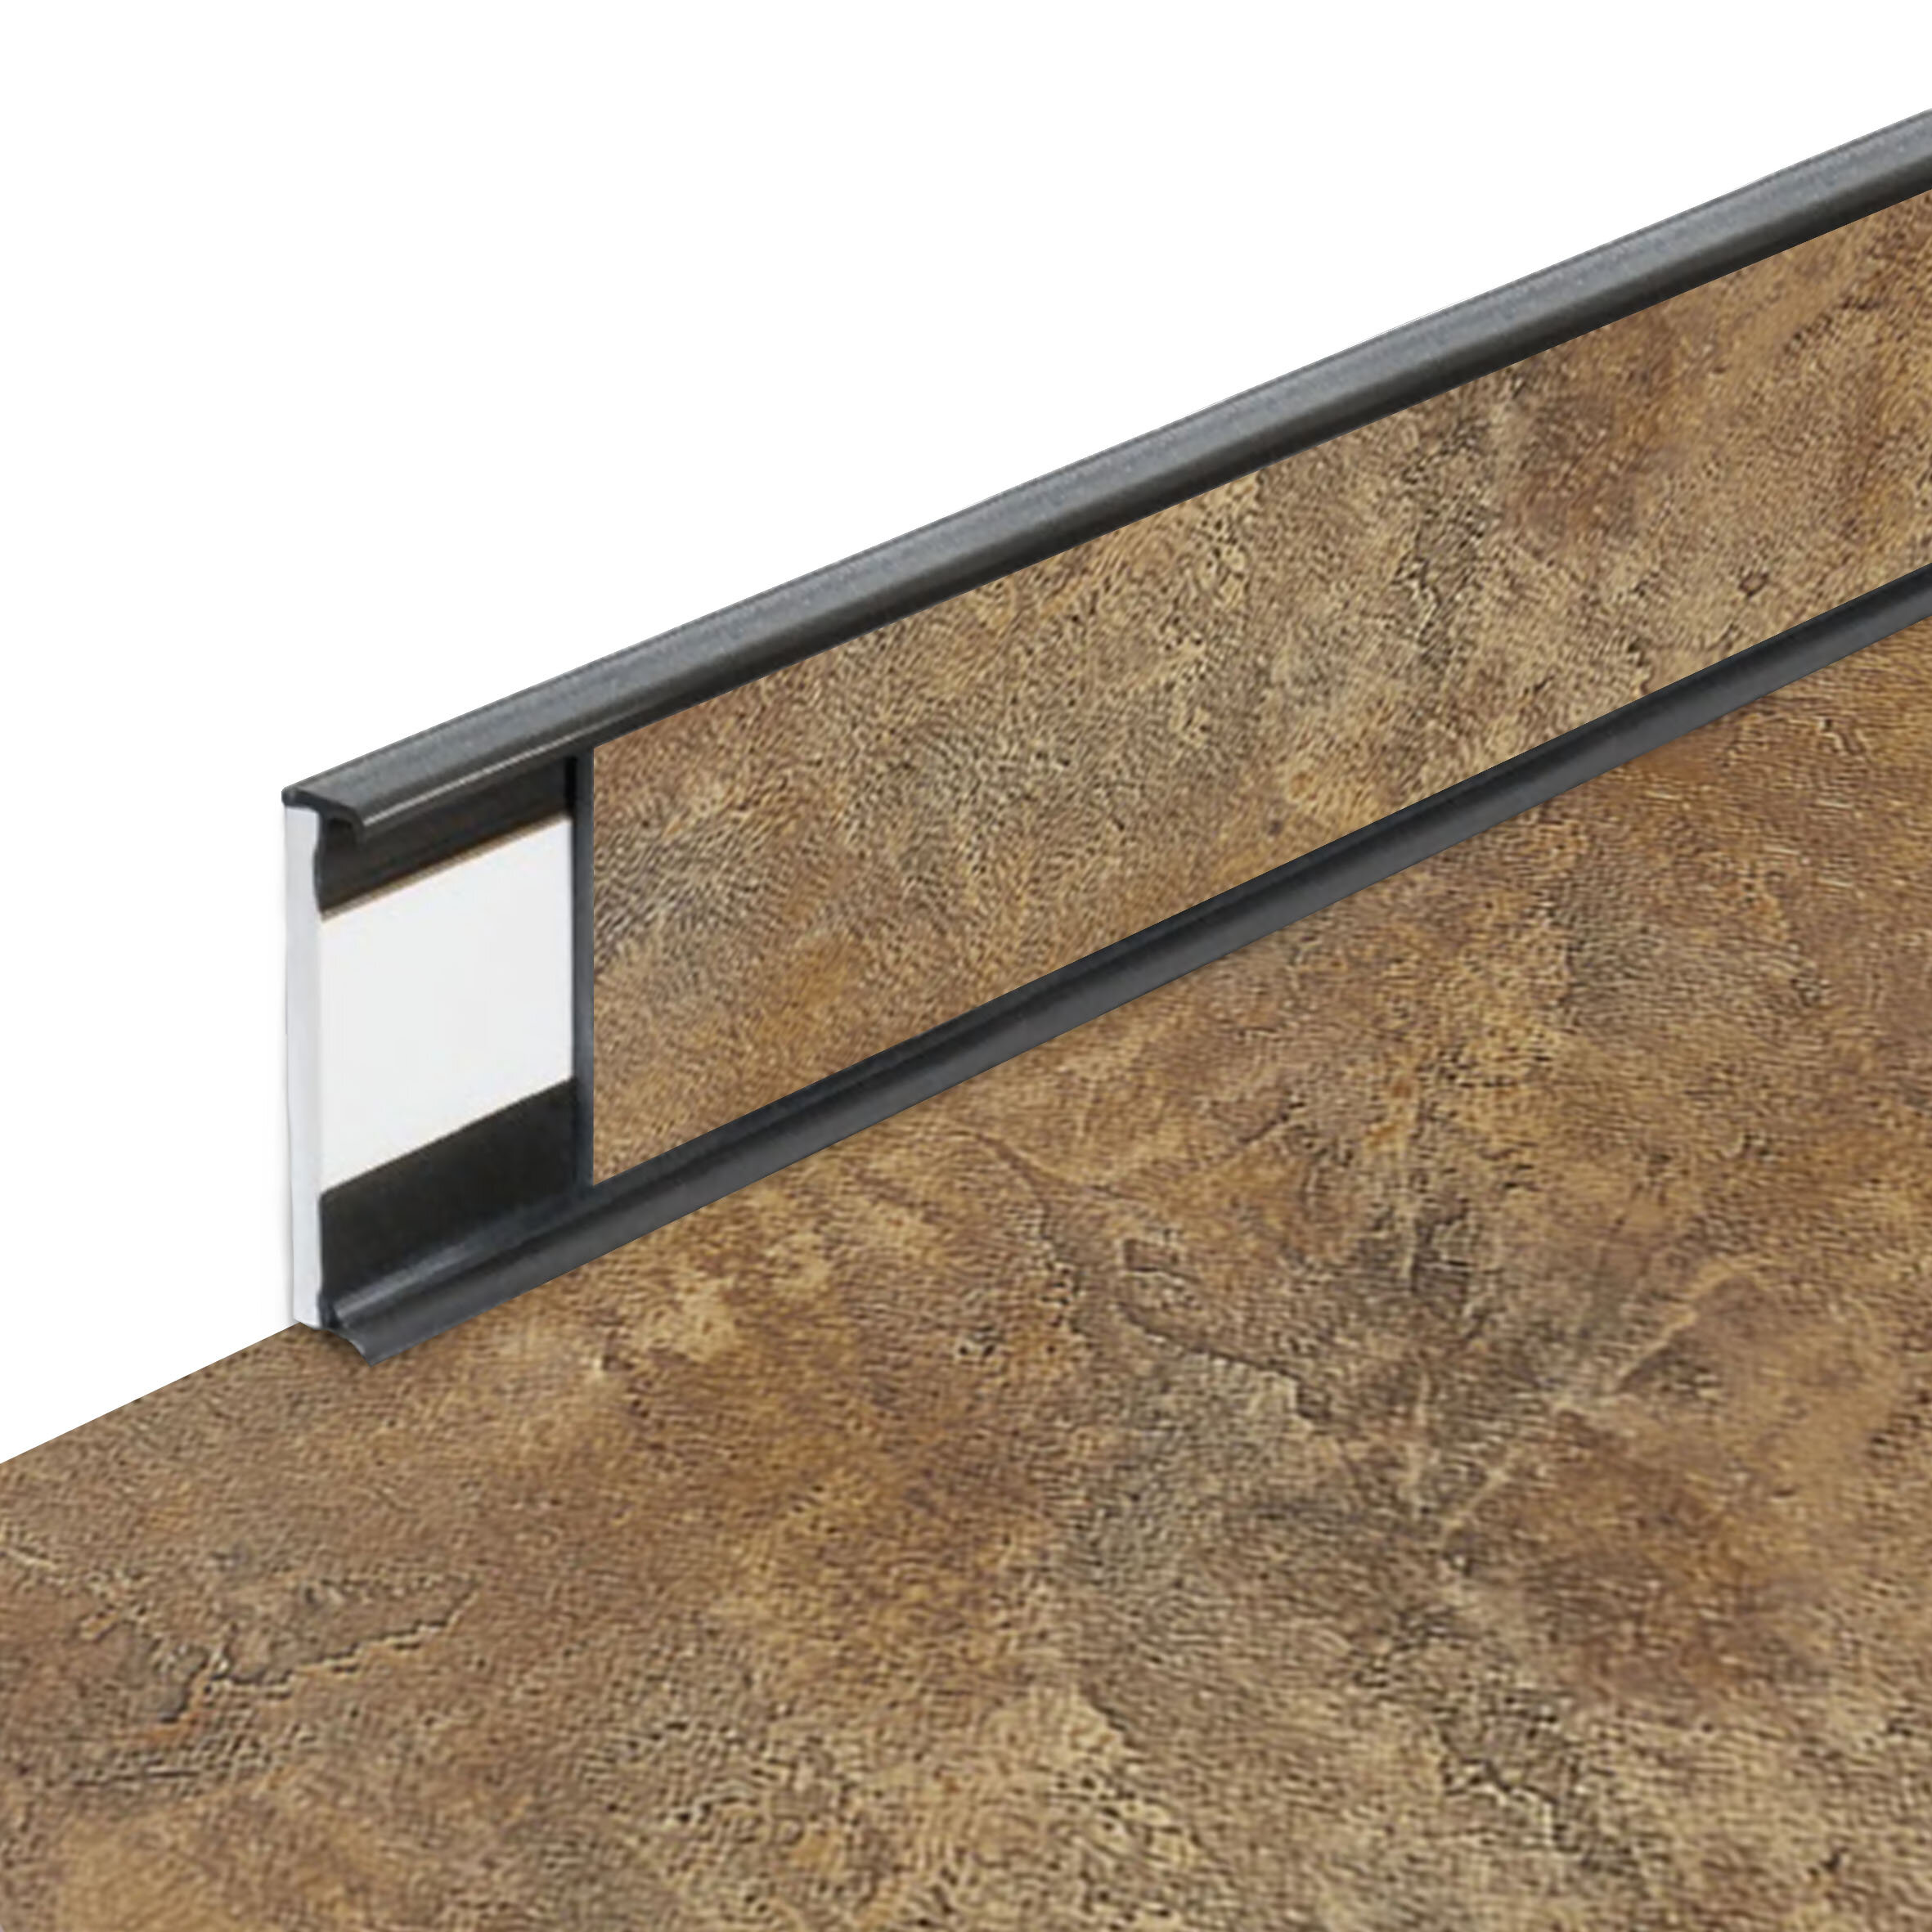 PVC vinylová soklová podlahová lišta Fortelock Business Forsen Rusty Steel C018 Graphite - dĺžka 200 cm, výška 5,8 cm, hrúbka 1,2 cm